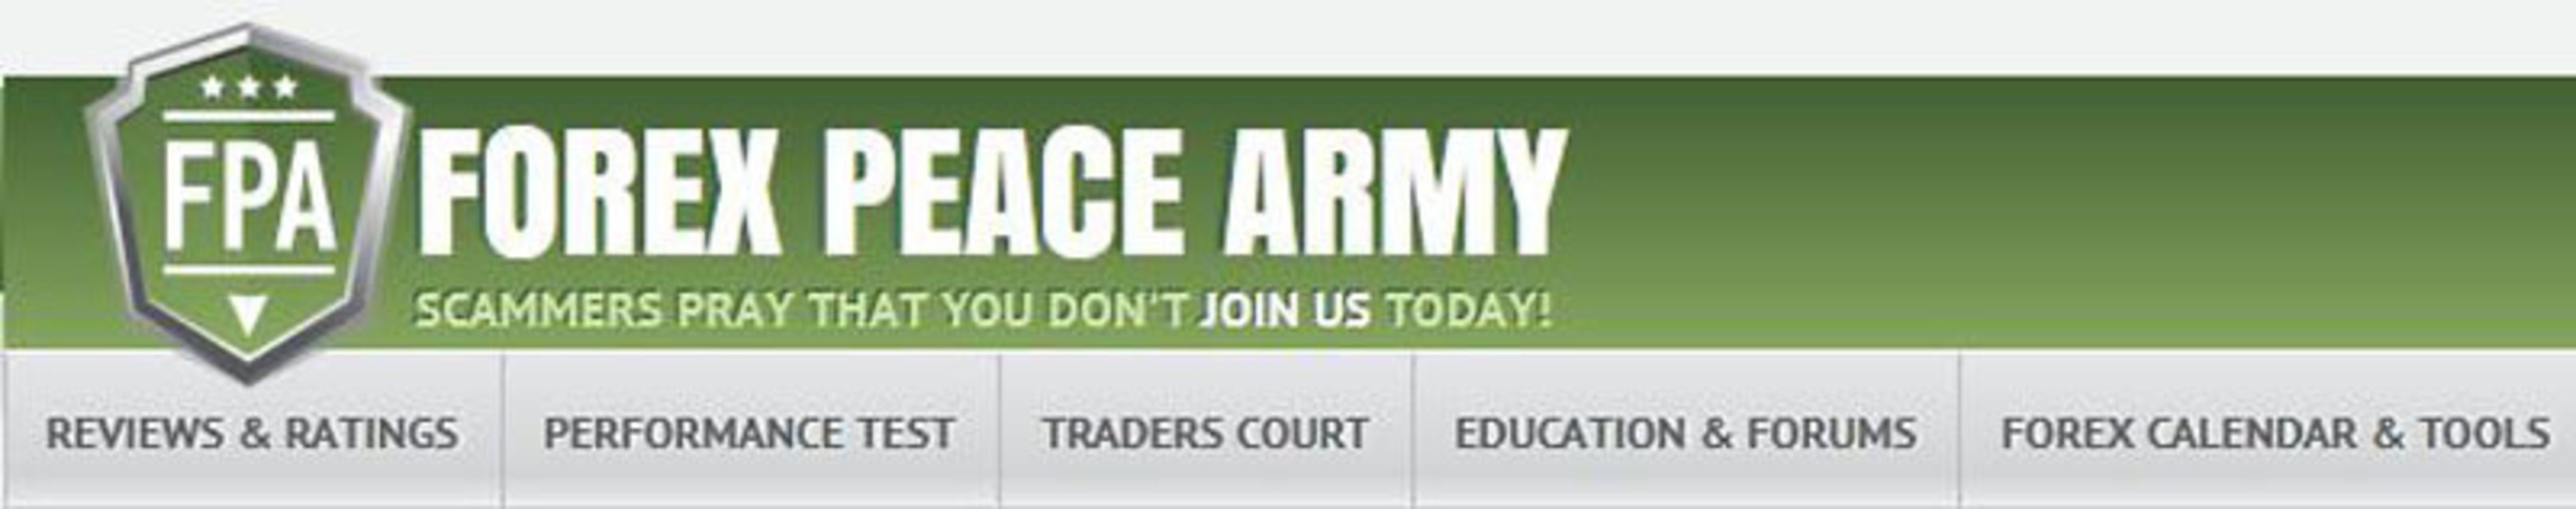 Forex Peace Army Logo. (PRNewsFoto/Forex Peace Army) (PRNewsFoto/FOREX PEACE ARMY)